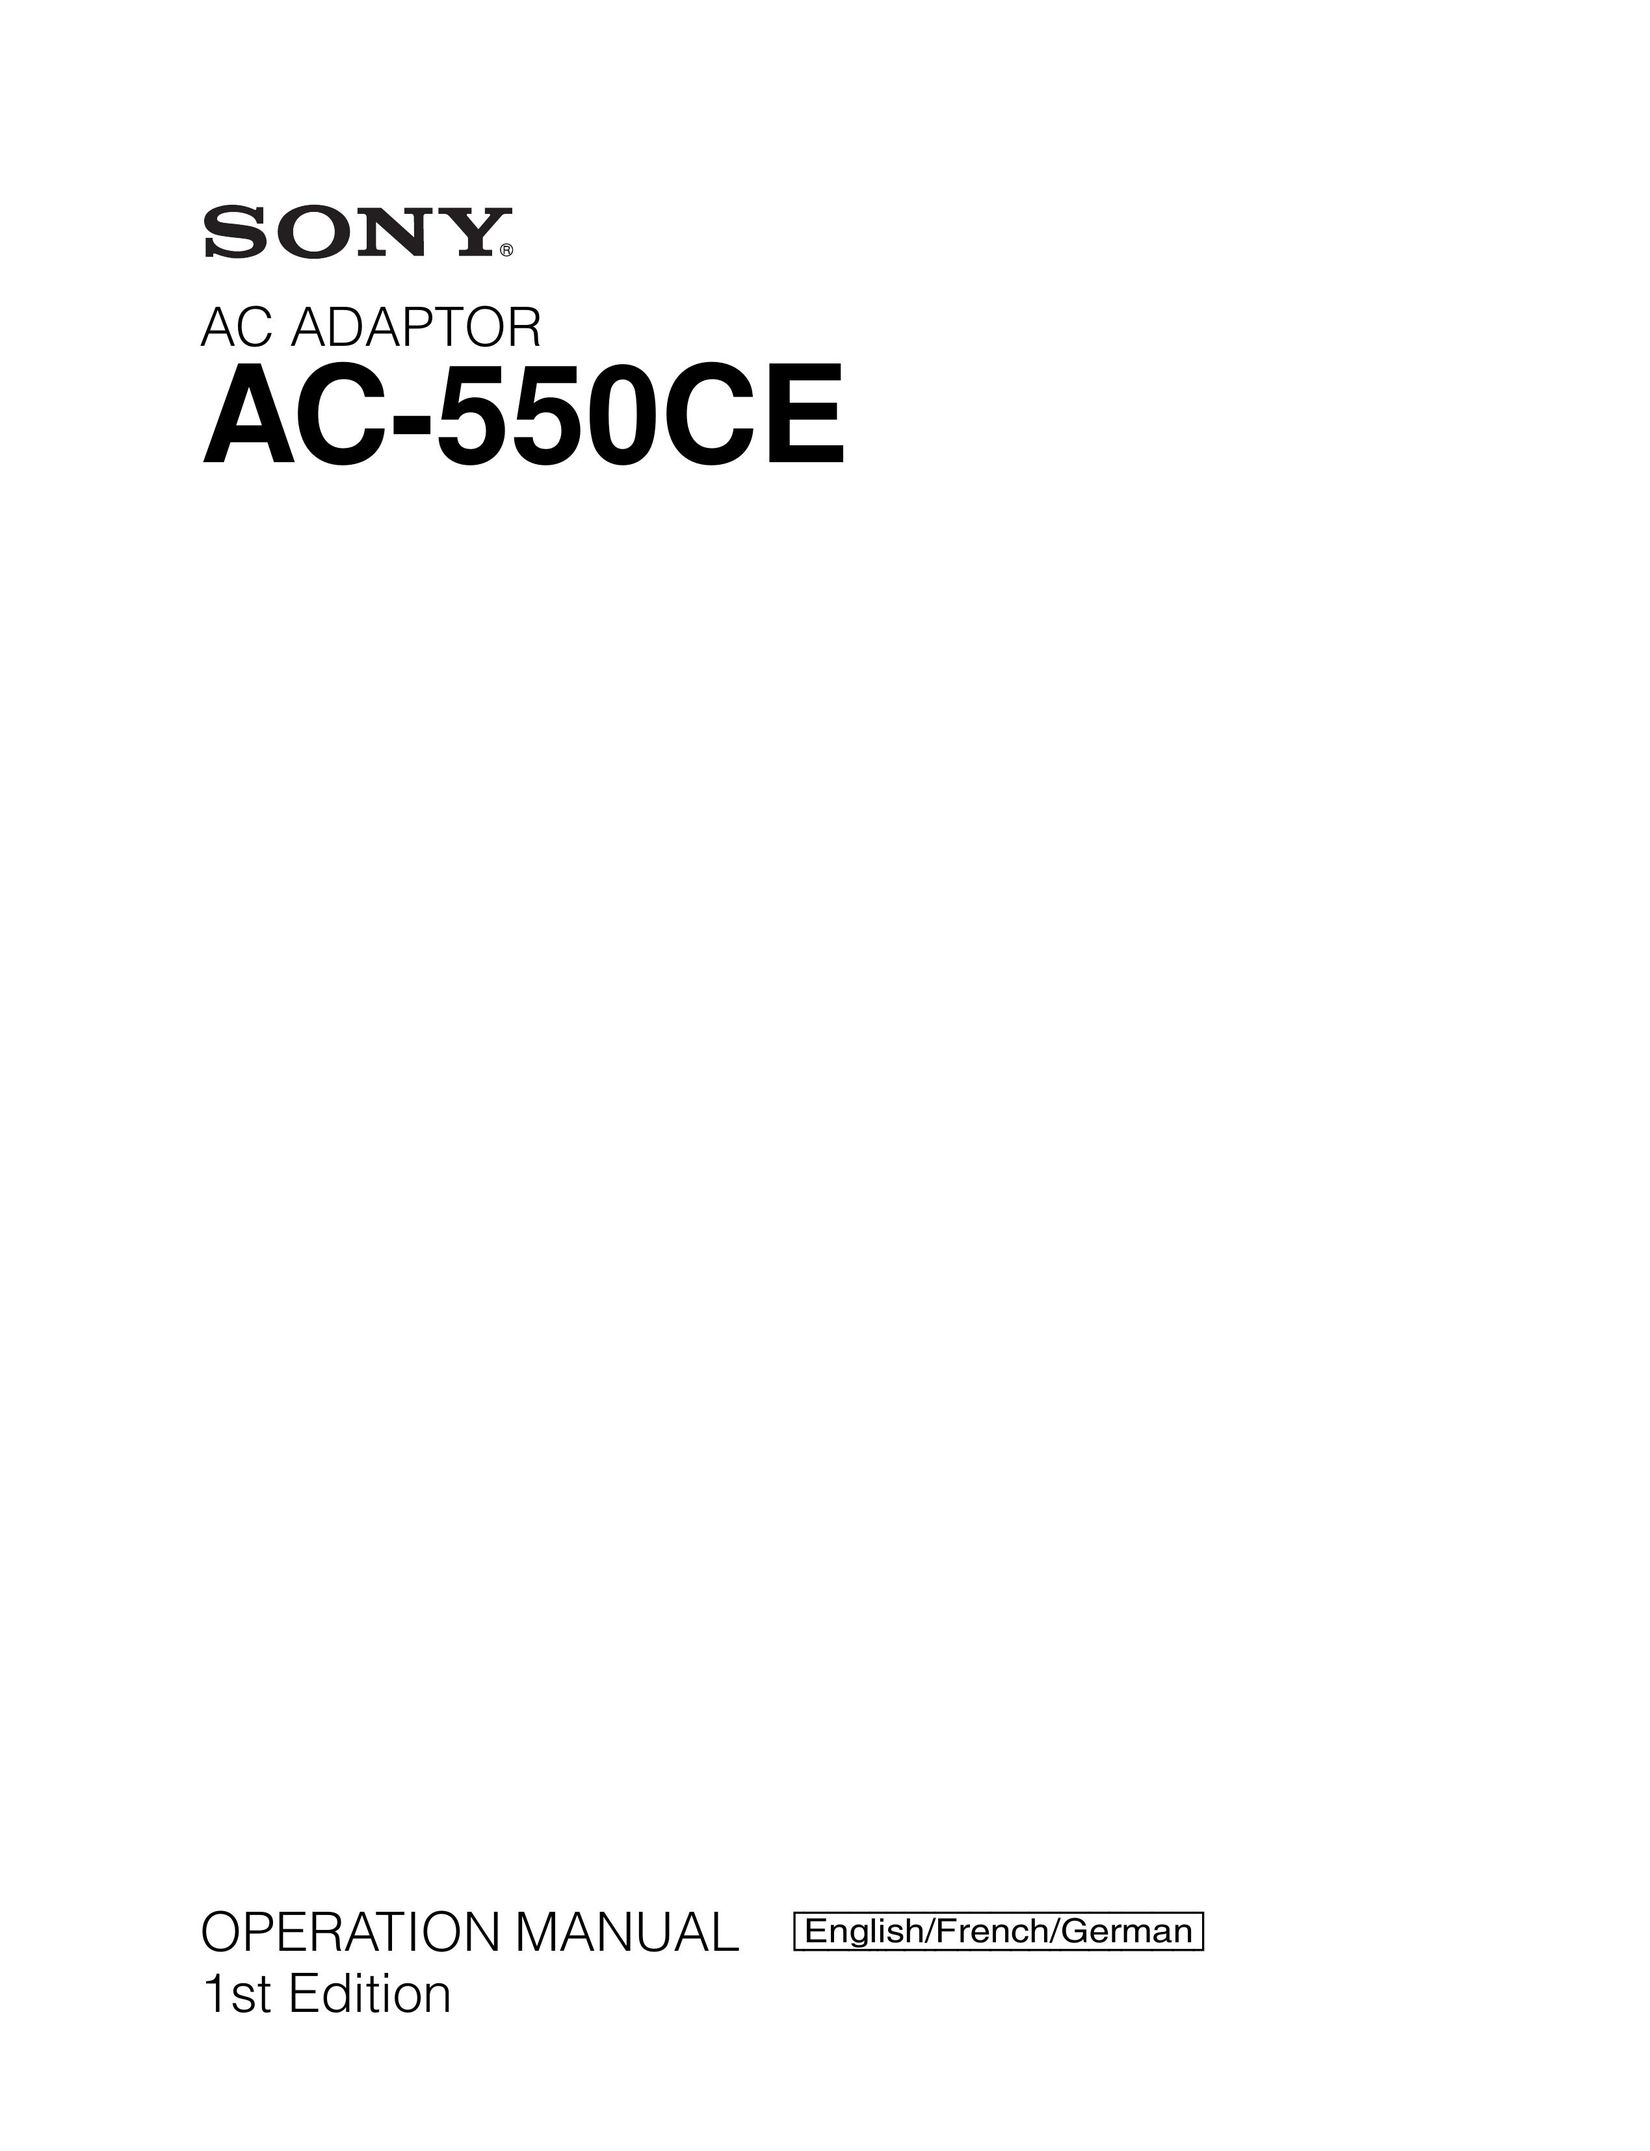 Sony AC-550CE Network Card User Manual